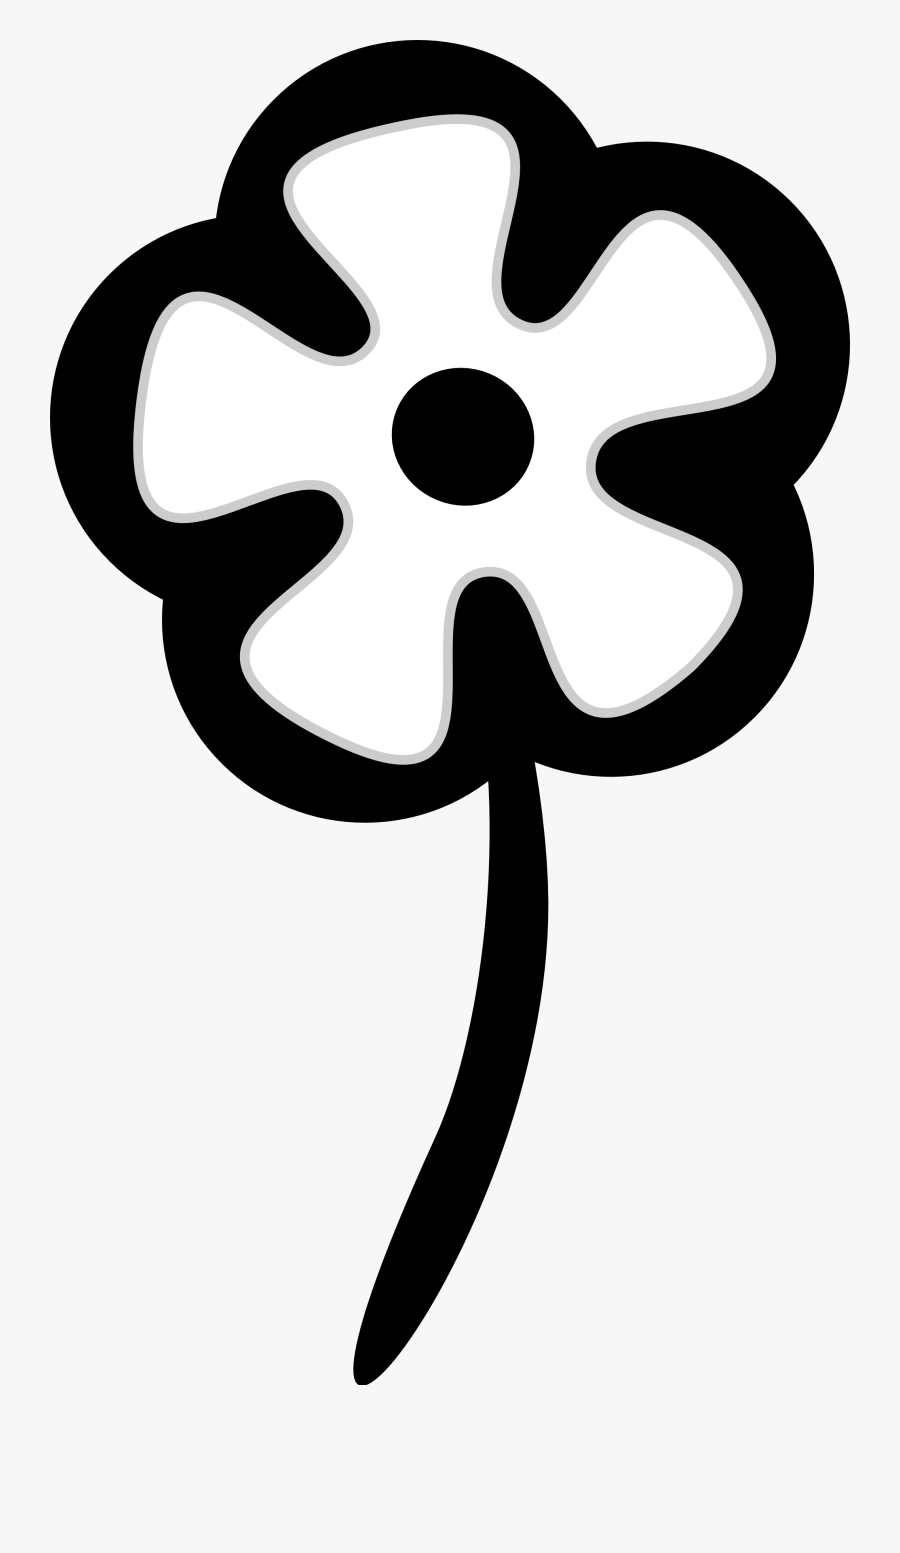 Black Flower Clipart - Black And White Flower Graphic, Transparent Clipart